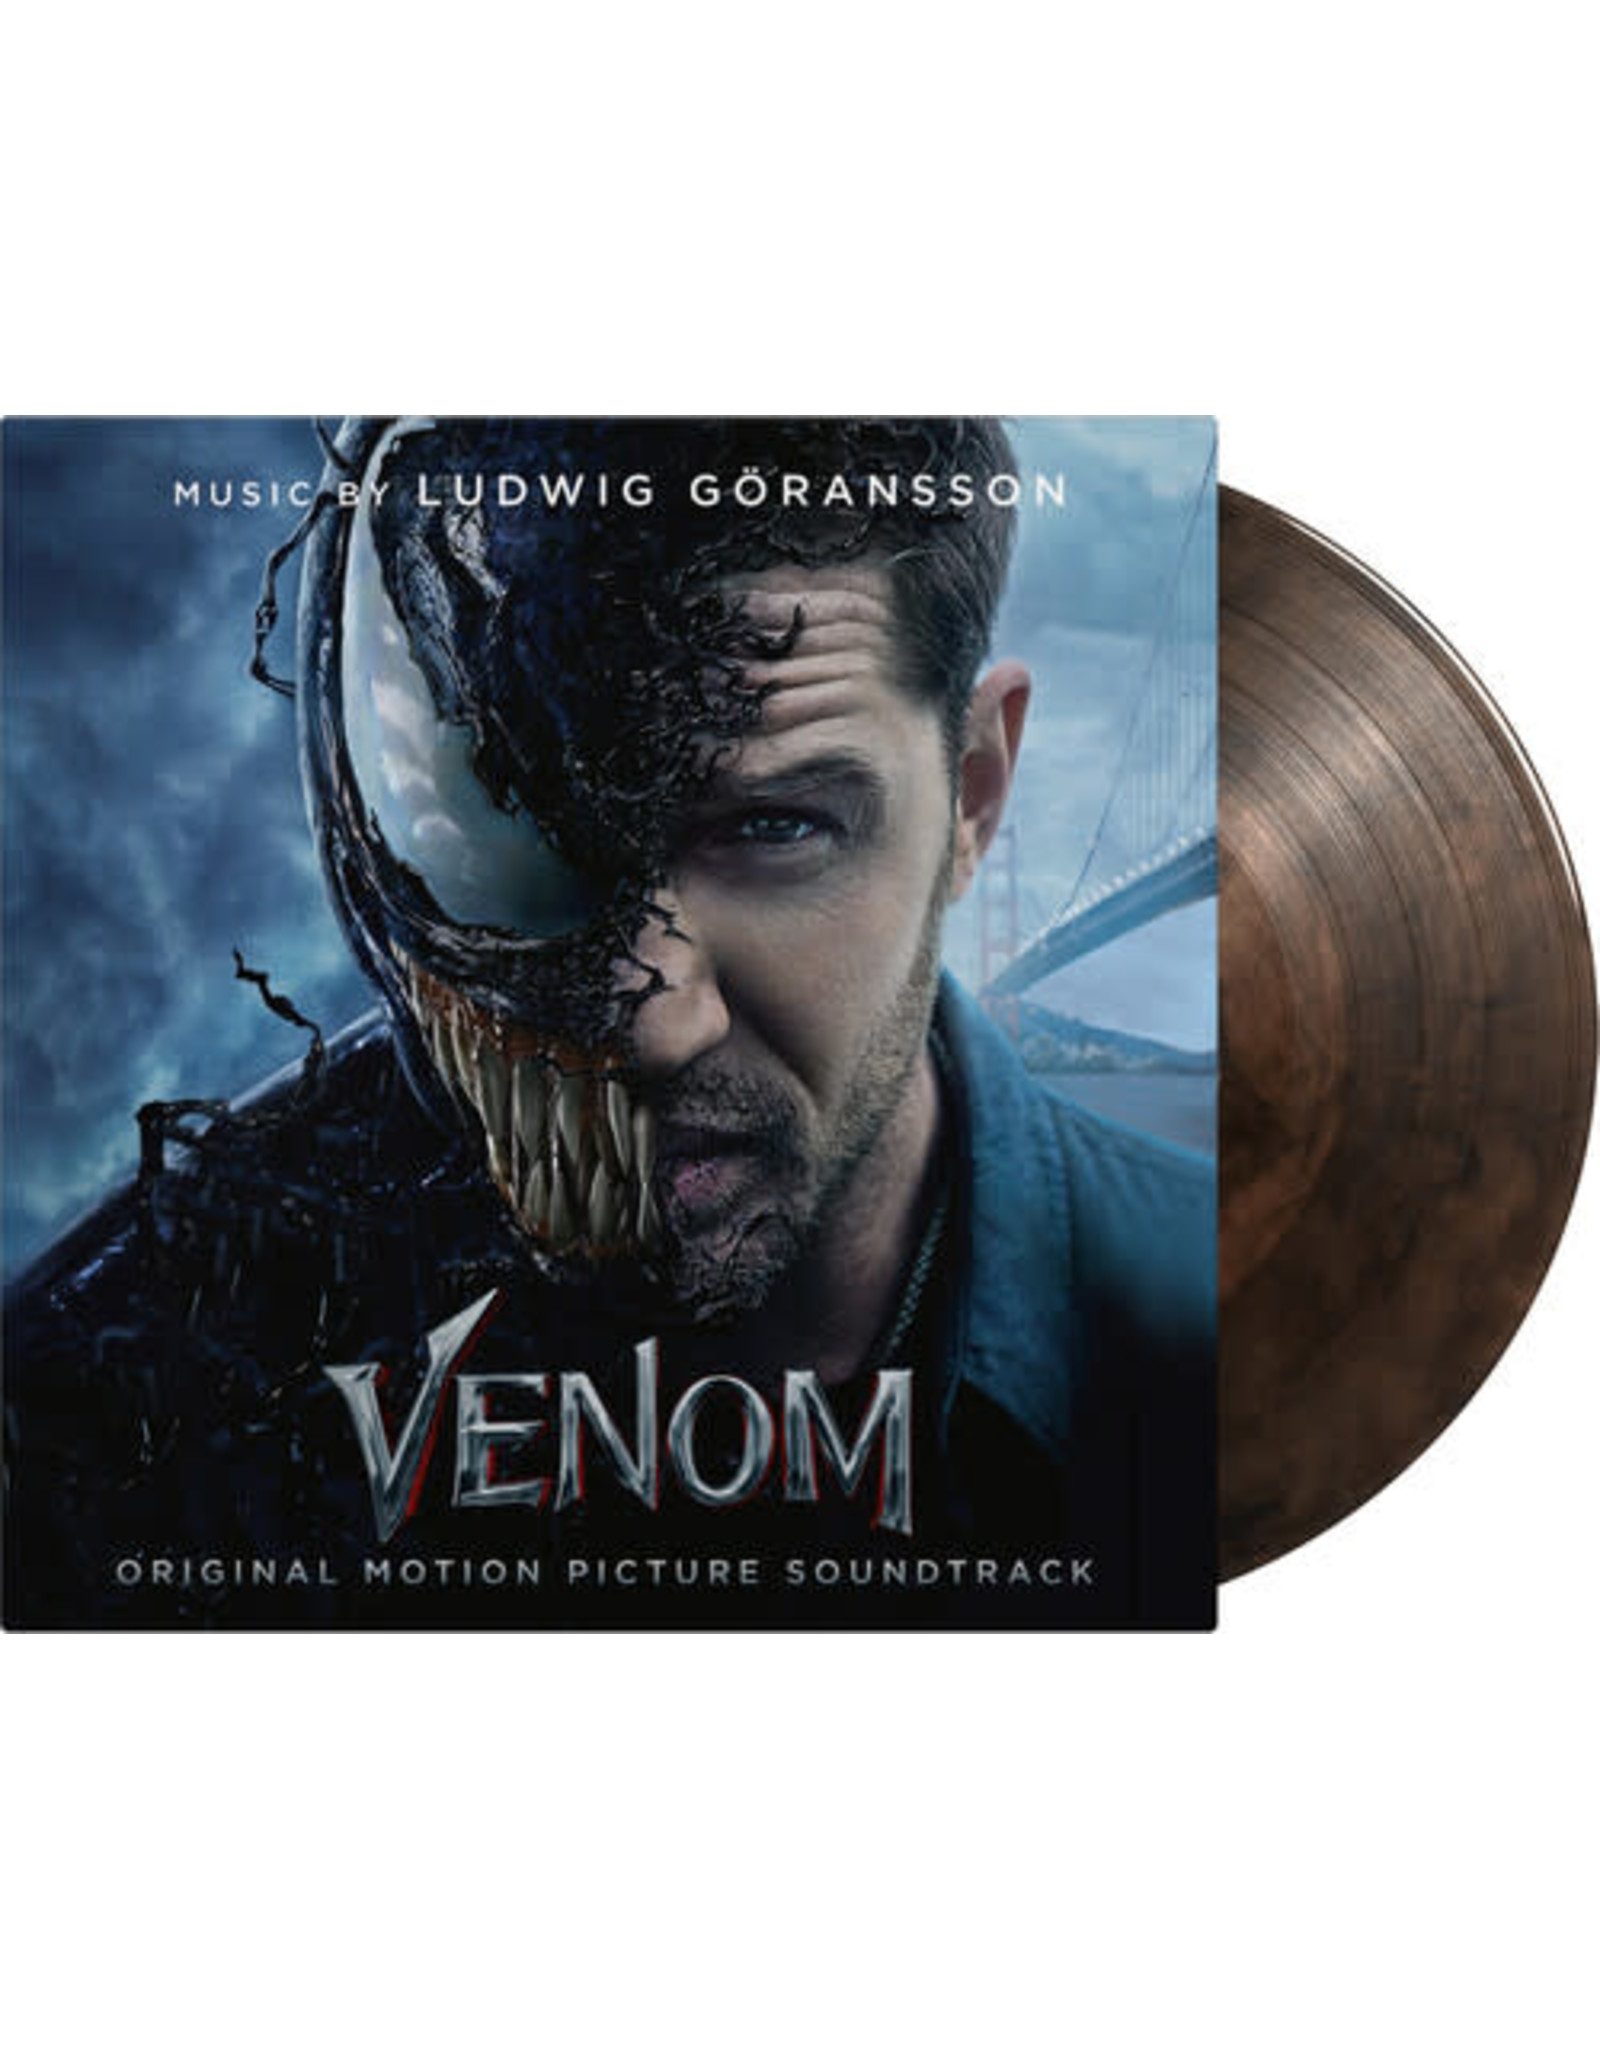 New Vinyl Ludwig Goransson -  Venom OST (Limited Edition, 180g, Black Clouds Colored) 2LP